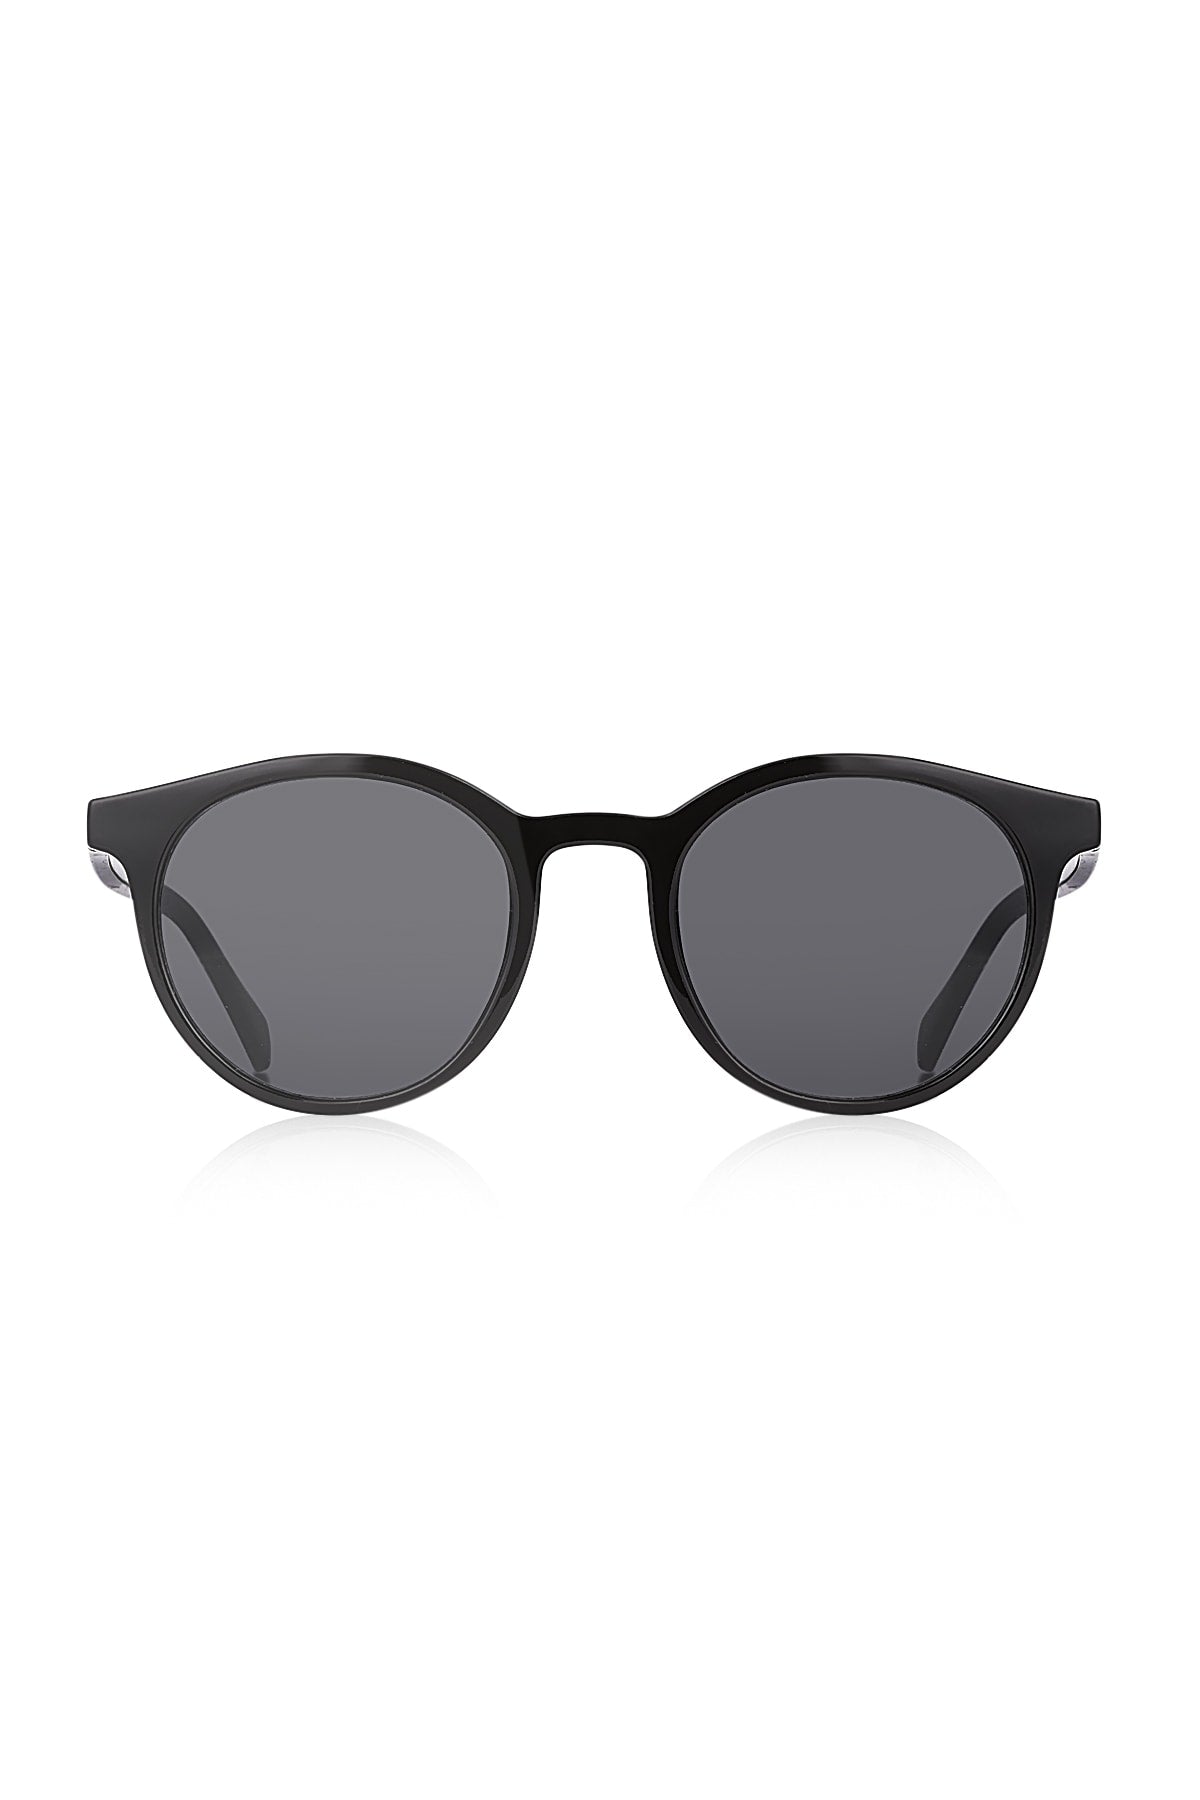 New Trend Unisex Sunglasses Black Shiny 2026